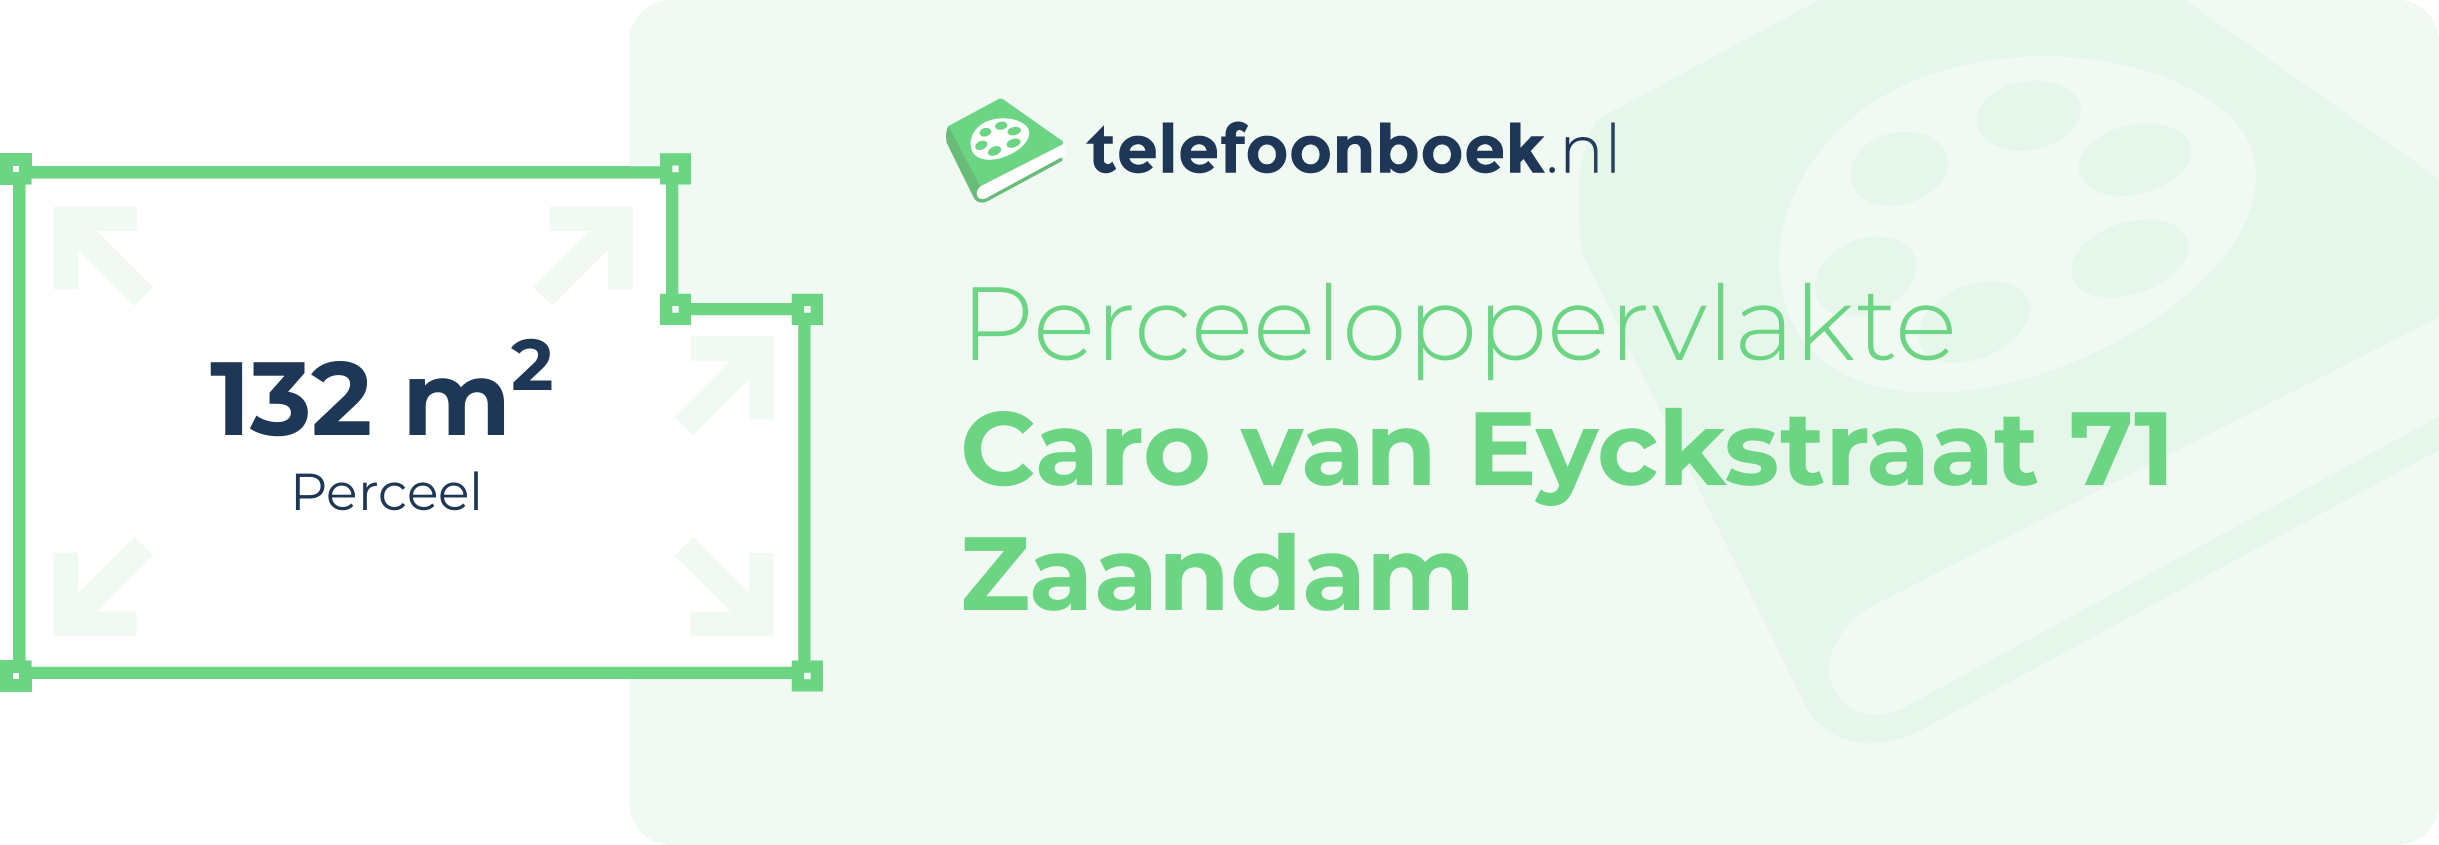 Perceeloppervlakte Caro Van Eyckstraat 71 Zaandam